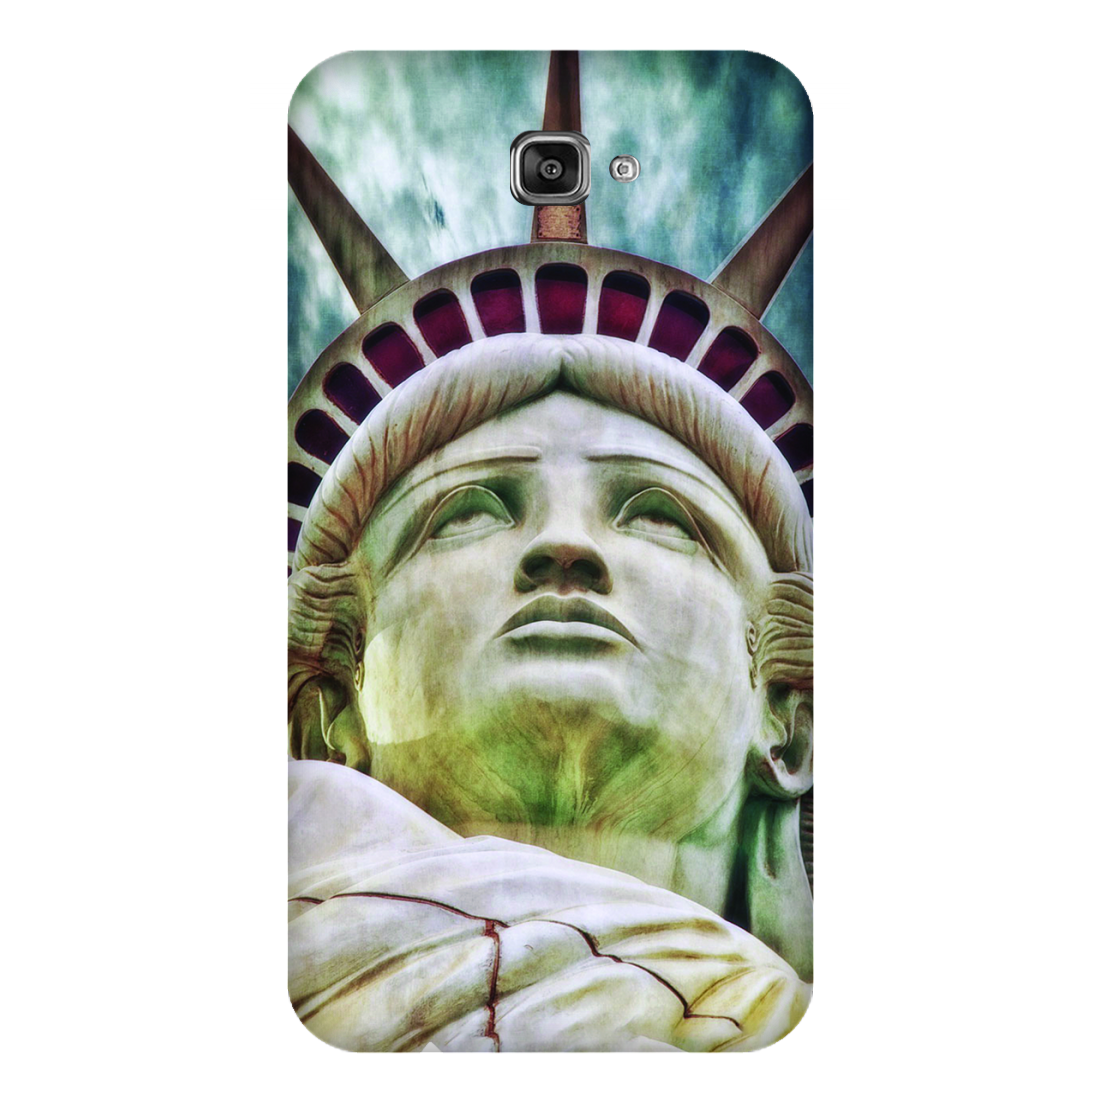 Statue of Liberty Case Samsung Galaxy J7 Prime 2